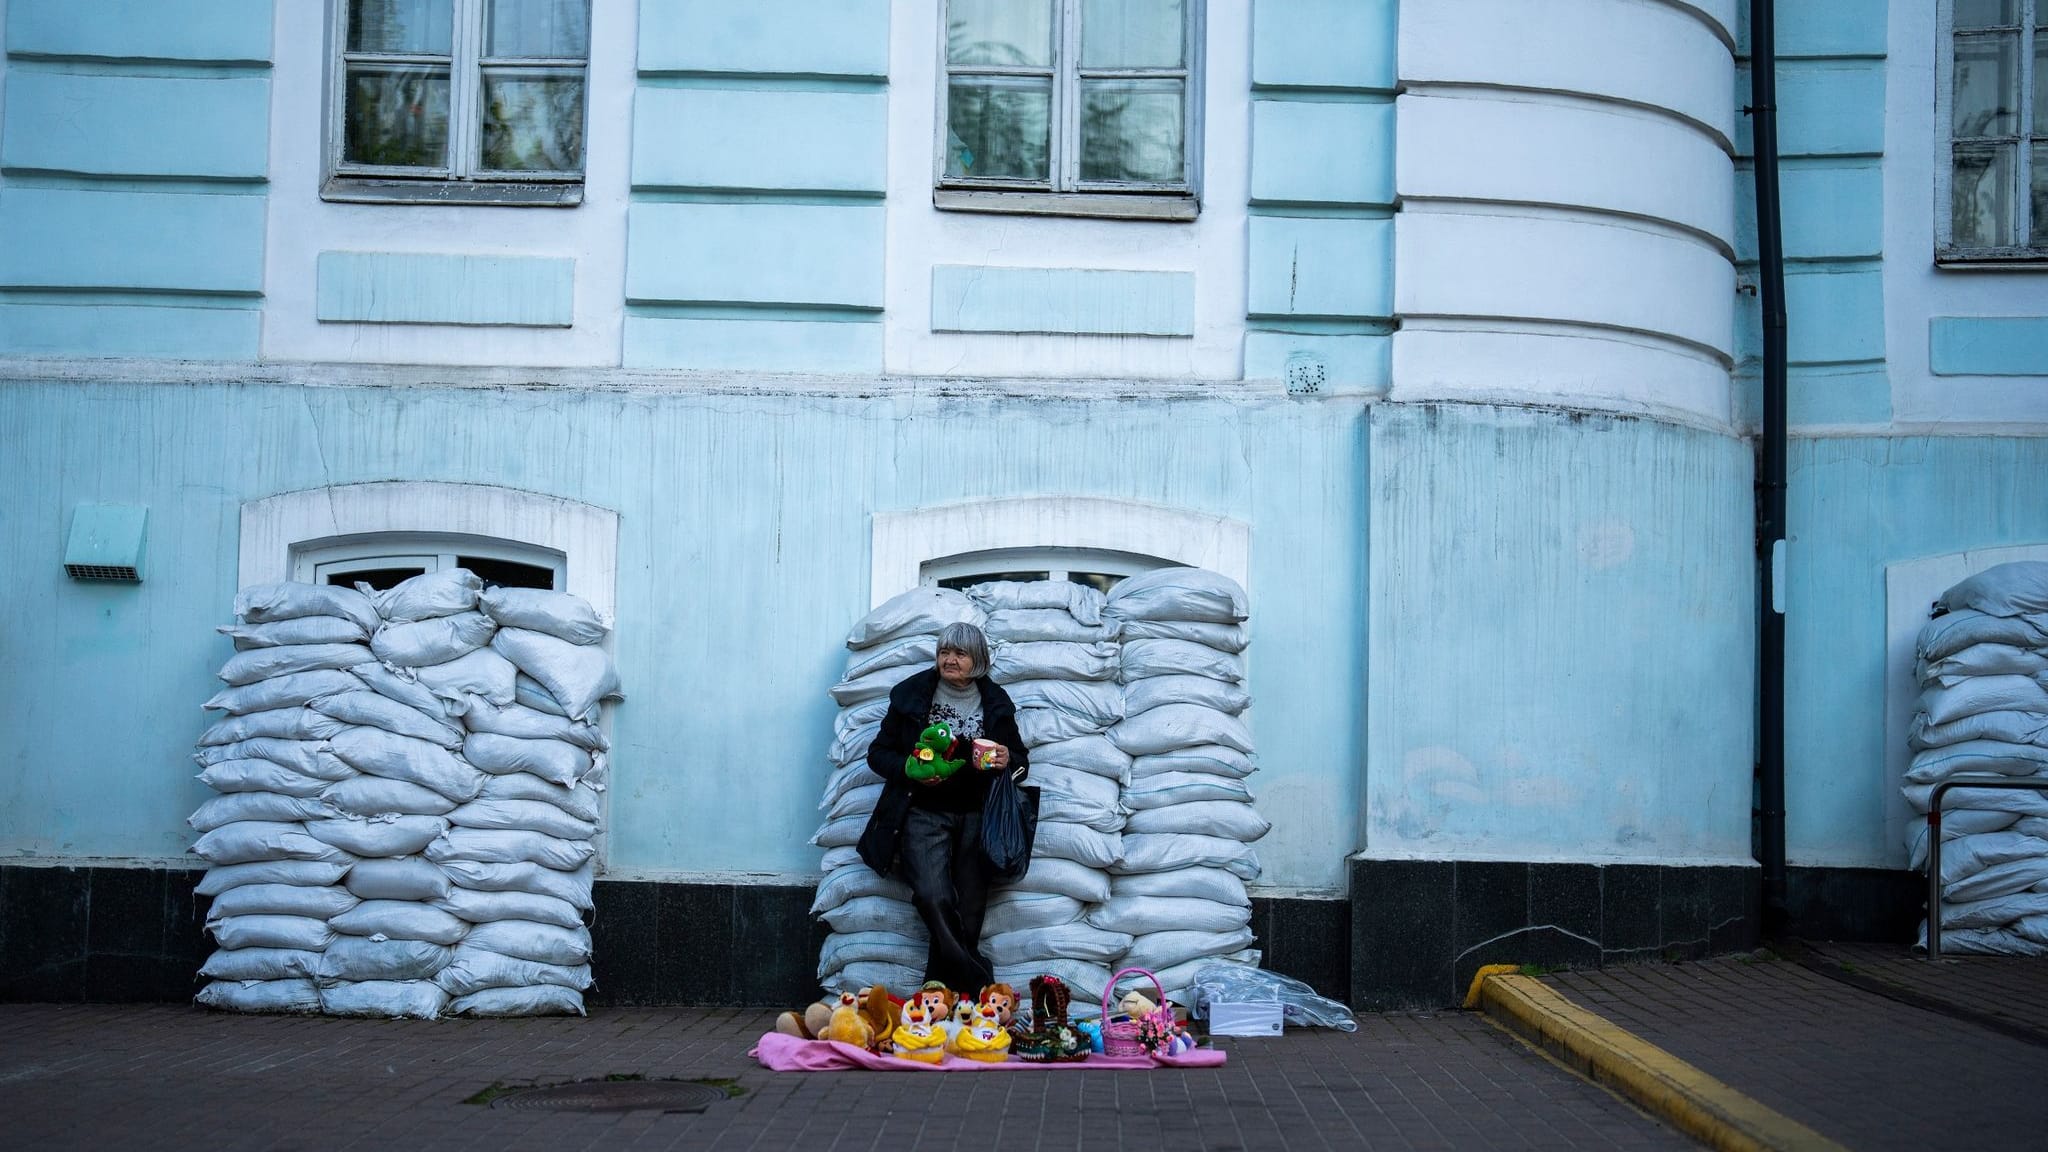 Krieg gegen die Ukraine: So ist die Lage